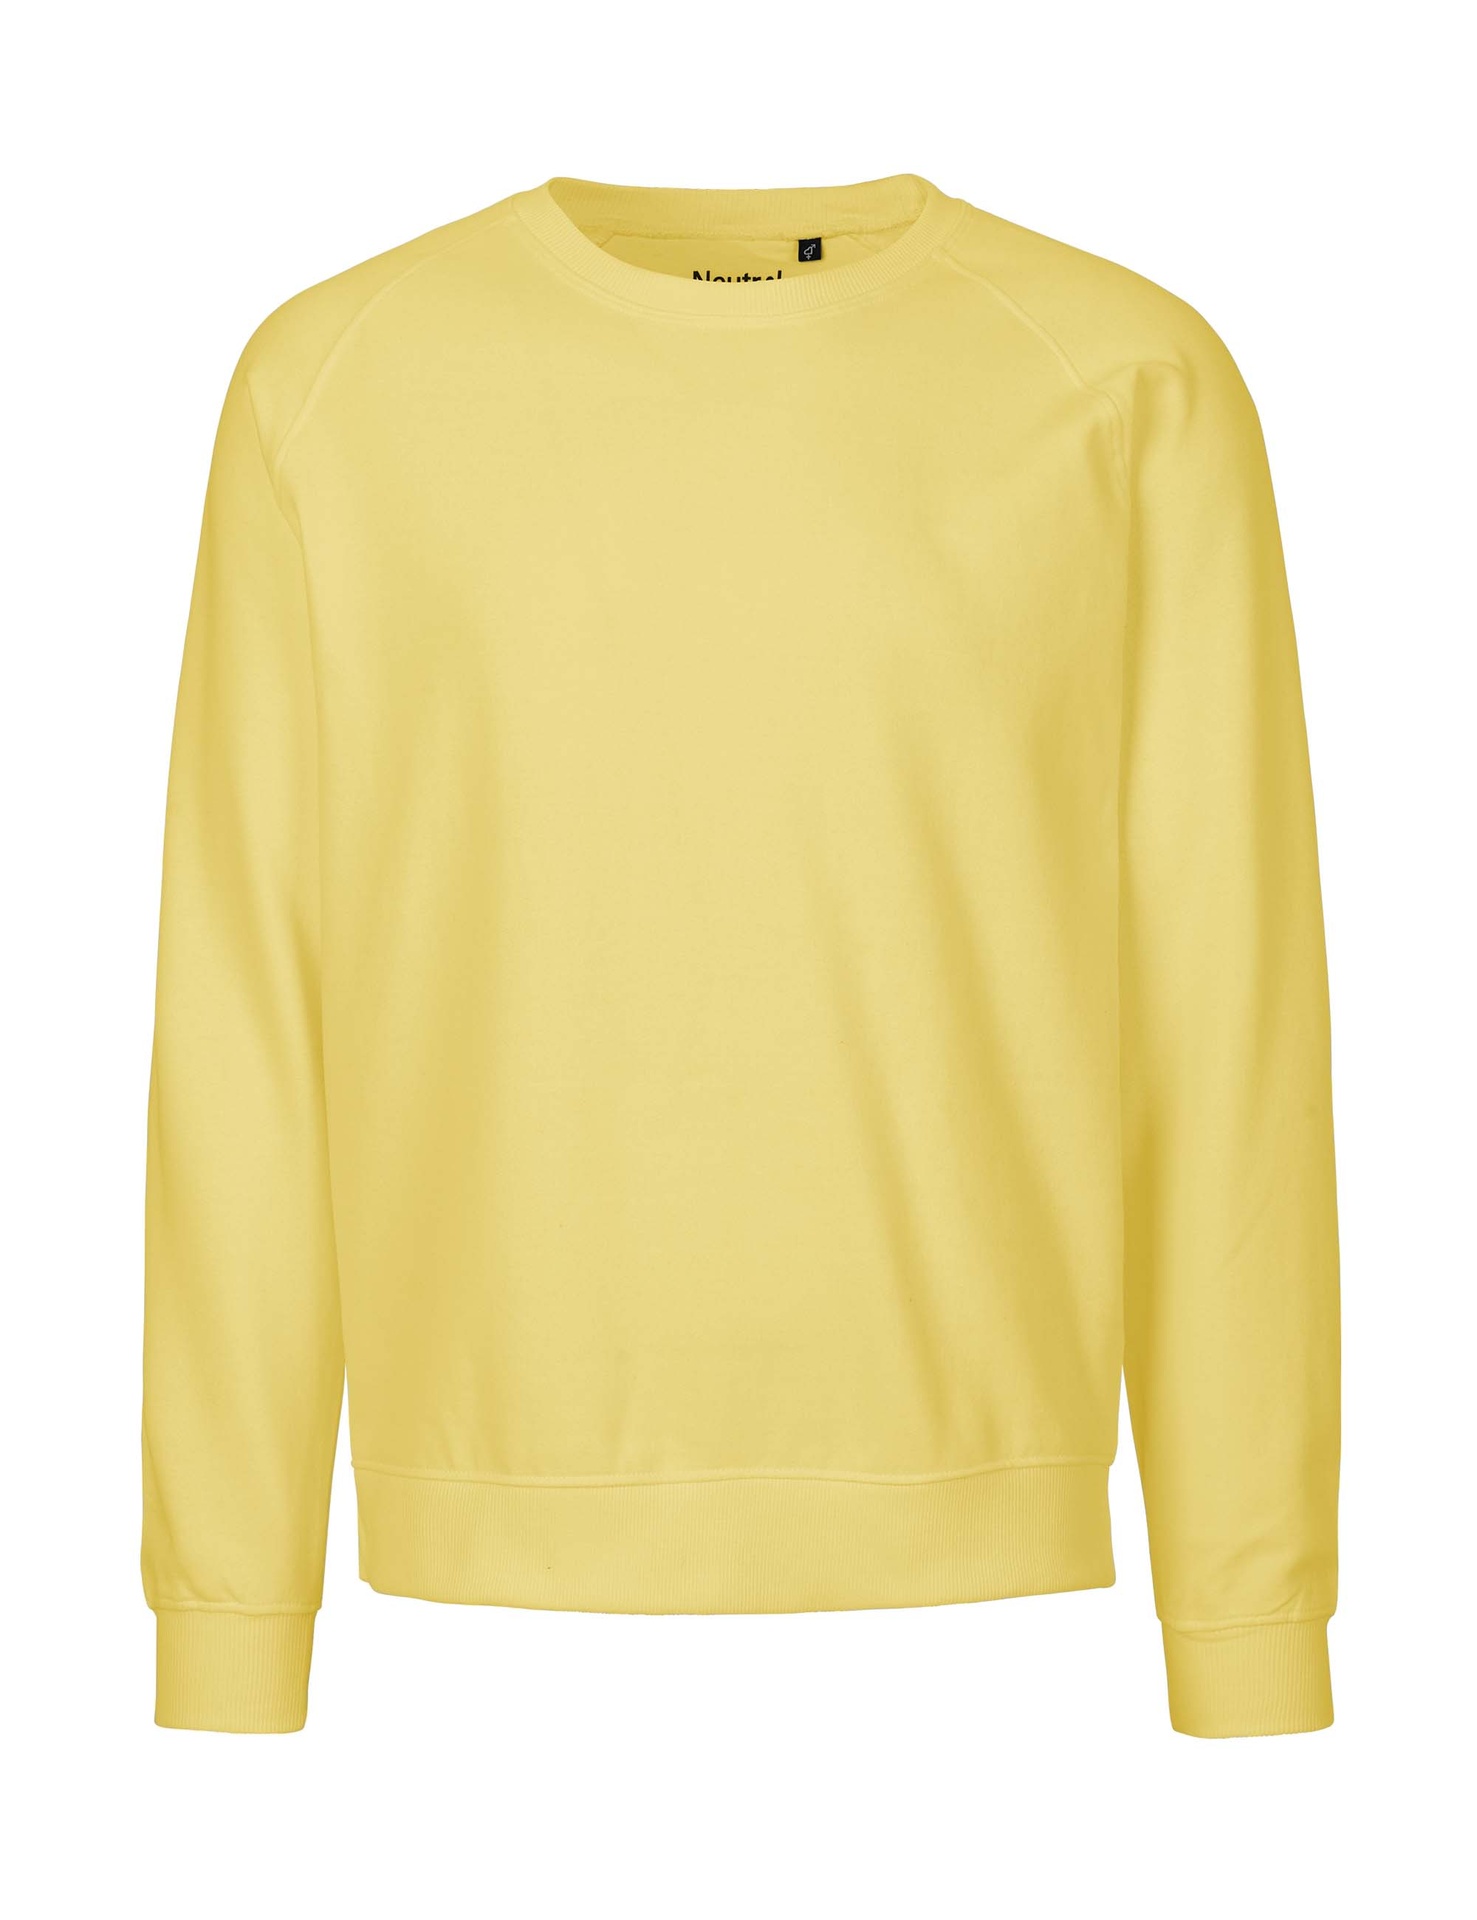 [PR/02854] Unisex Sweatshirt (Dusty Yellow 43, XL)